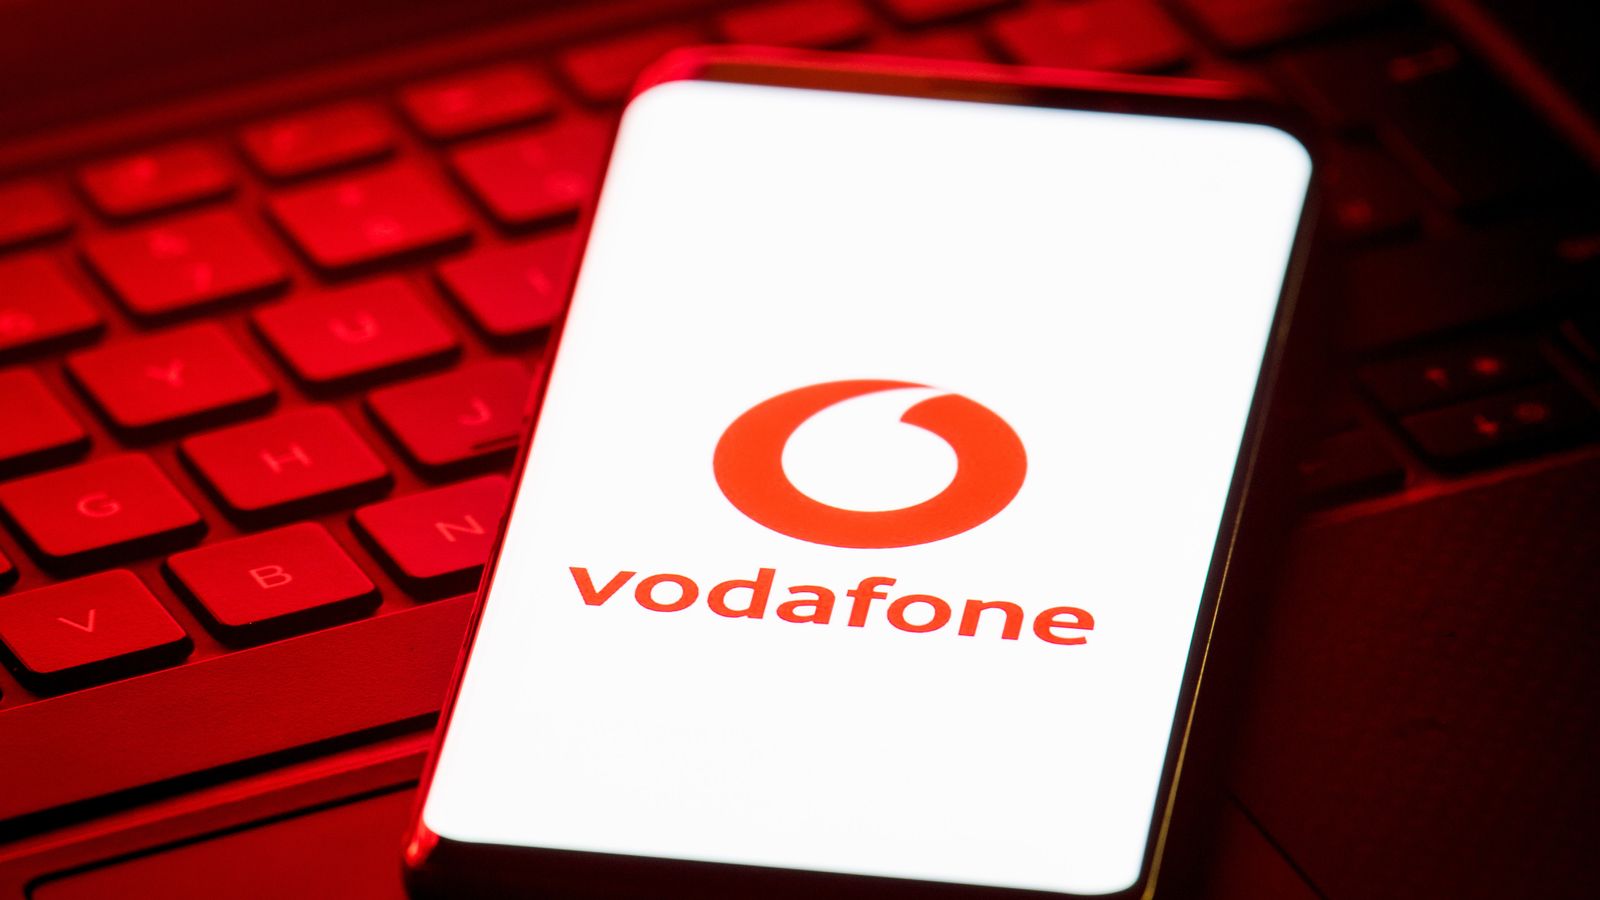 Vodafone plans 11,000 job cuts as new boss rues performance